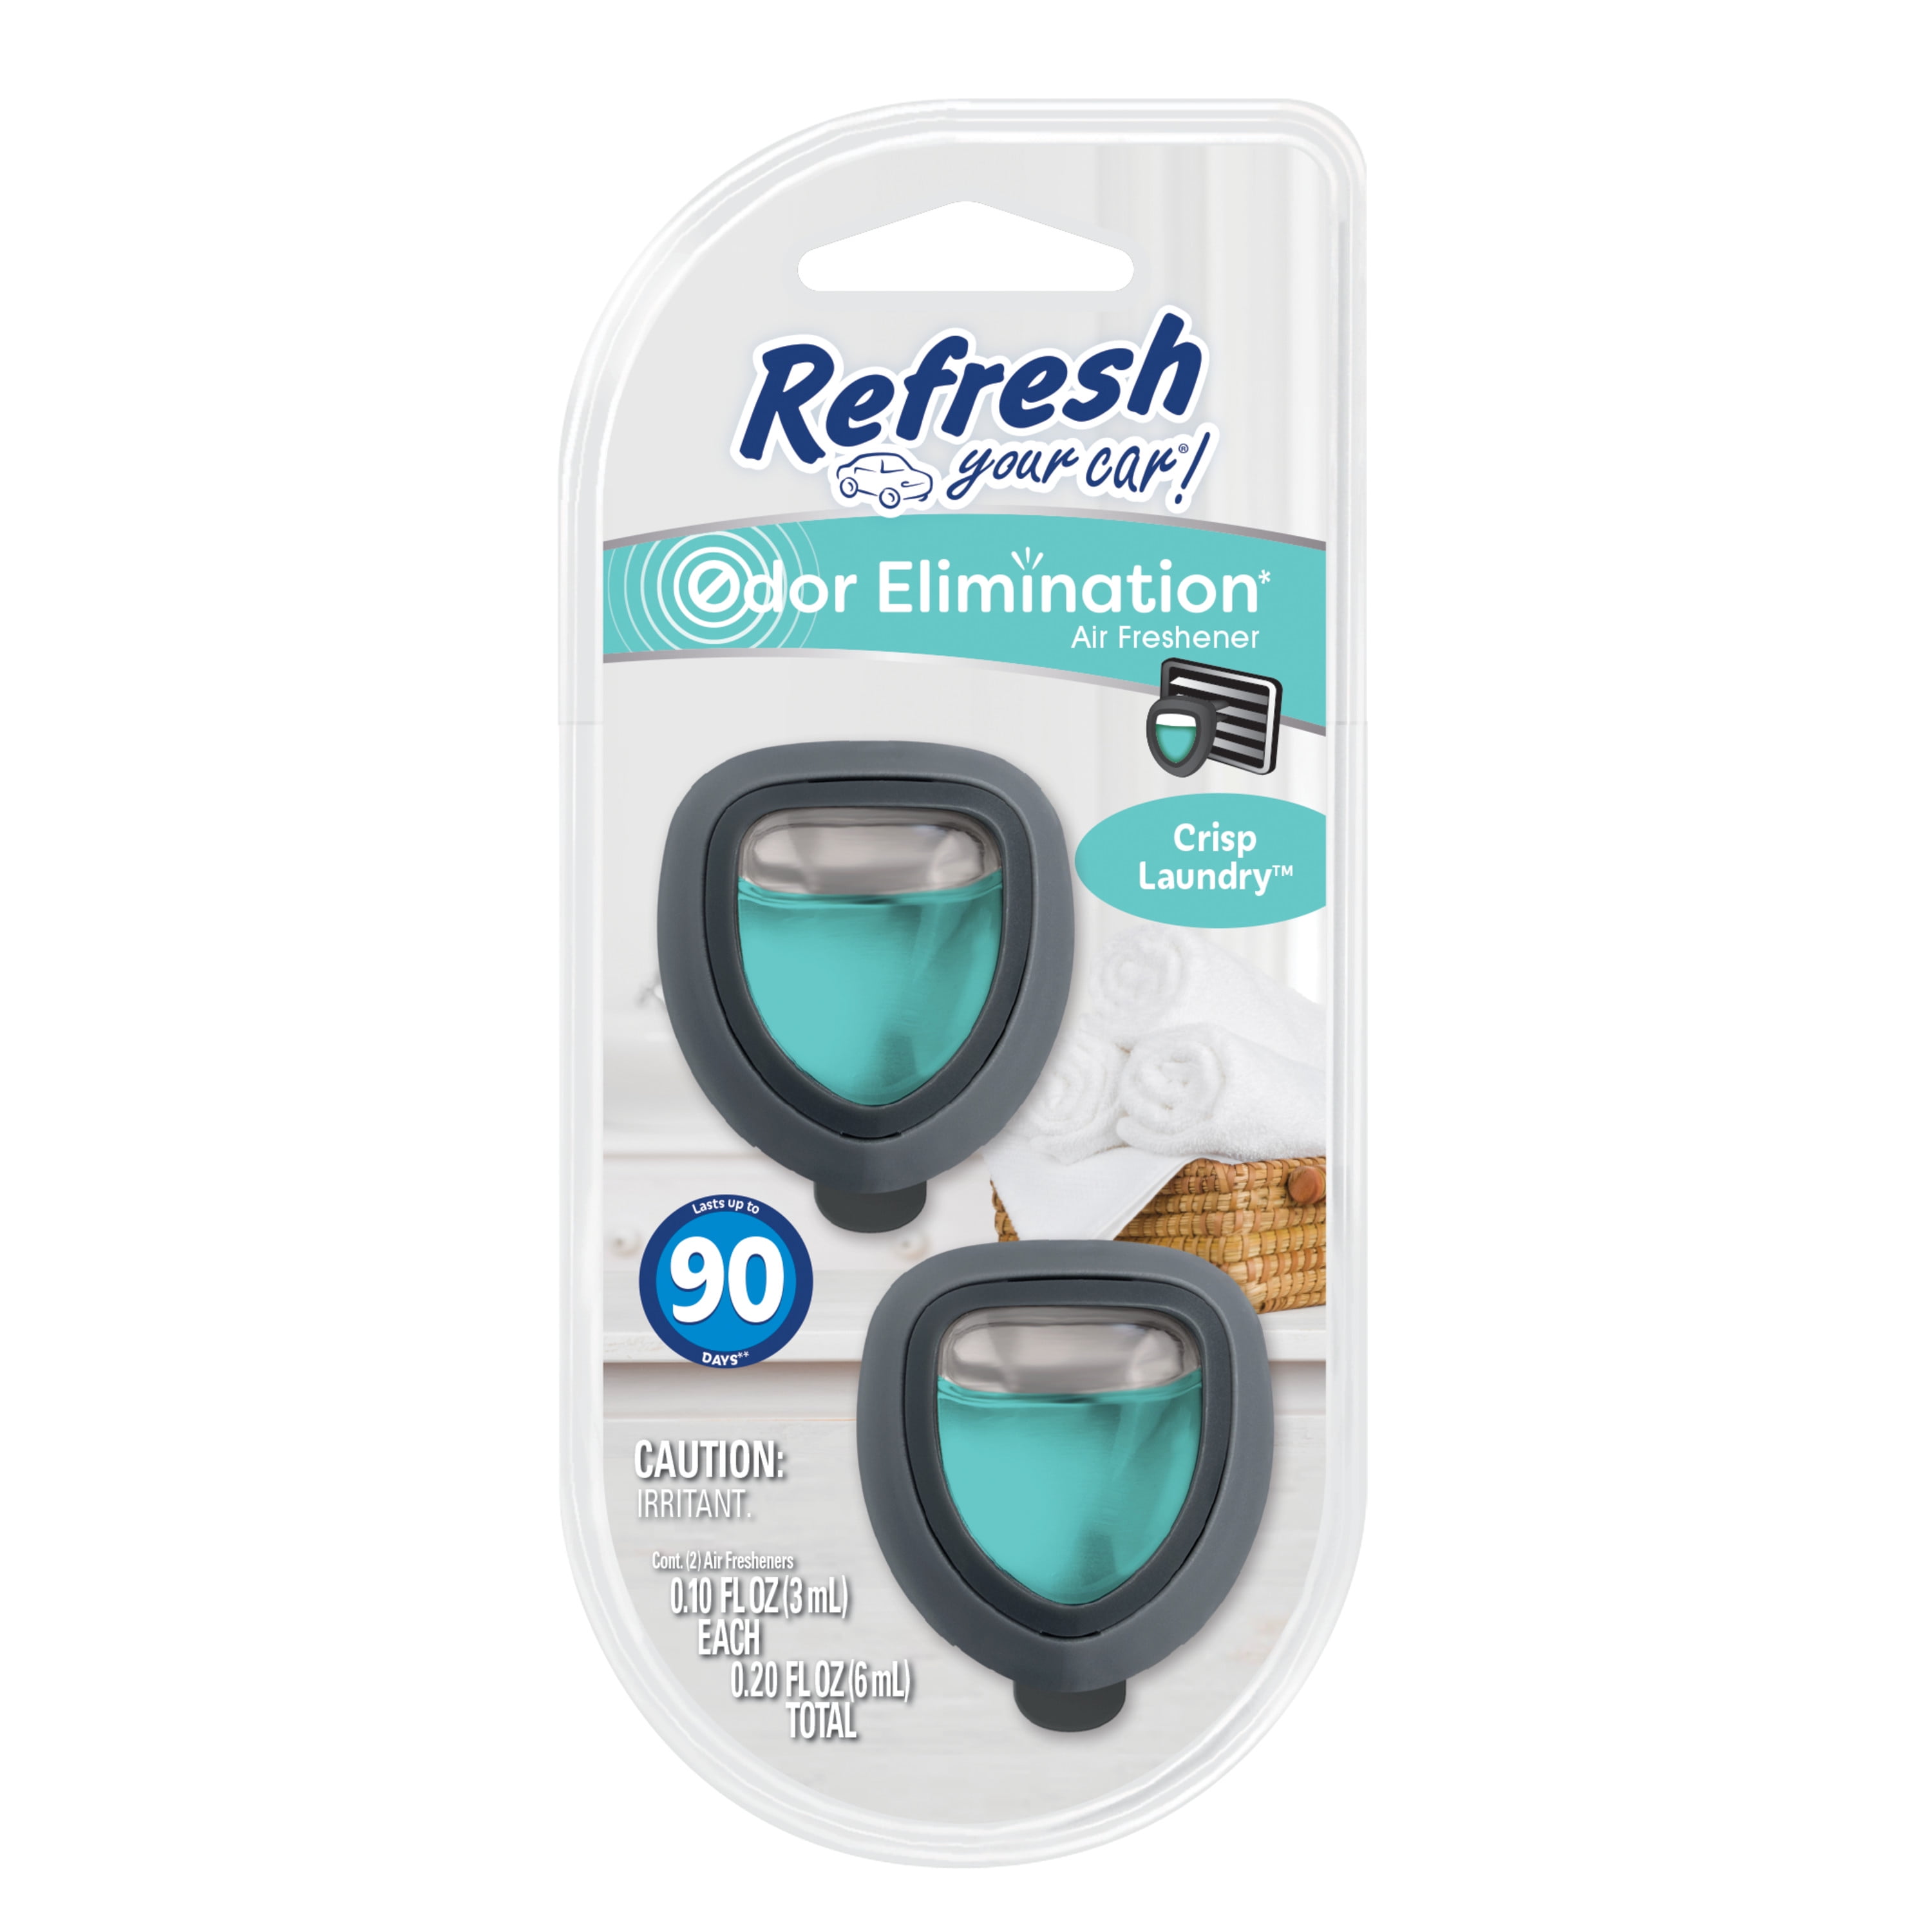 Refresh Your Car! Mini Diffuser Air Freshener (Crisp Laundry Scent, 2 Pack)